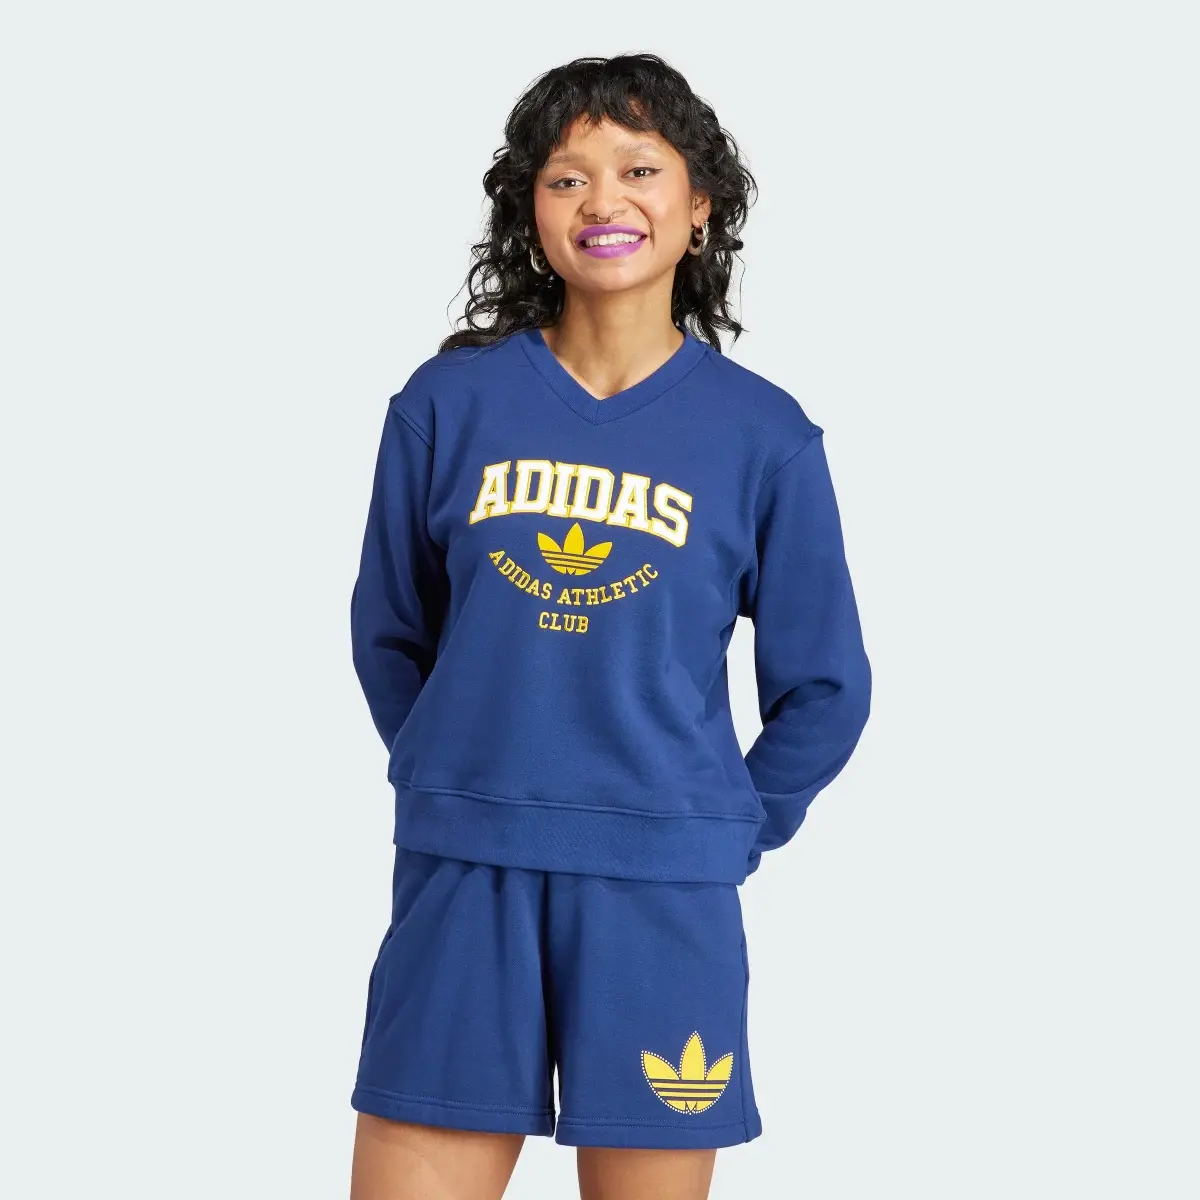 Adidas College Graphic Sweatshirt. 2